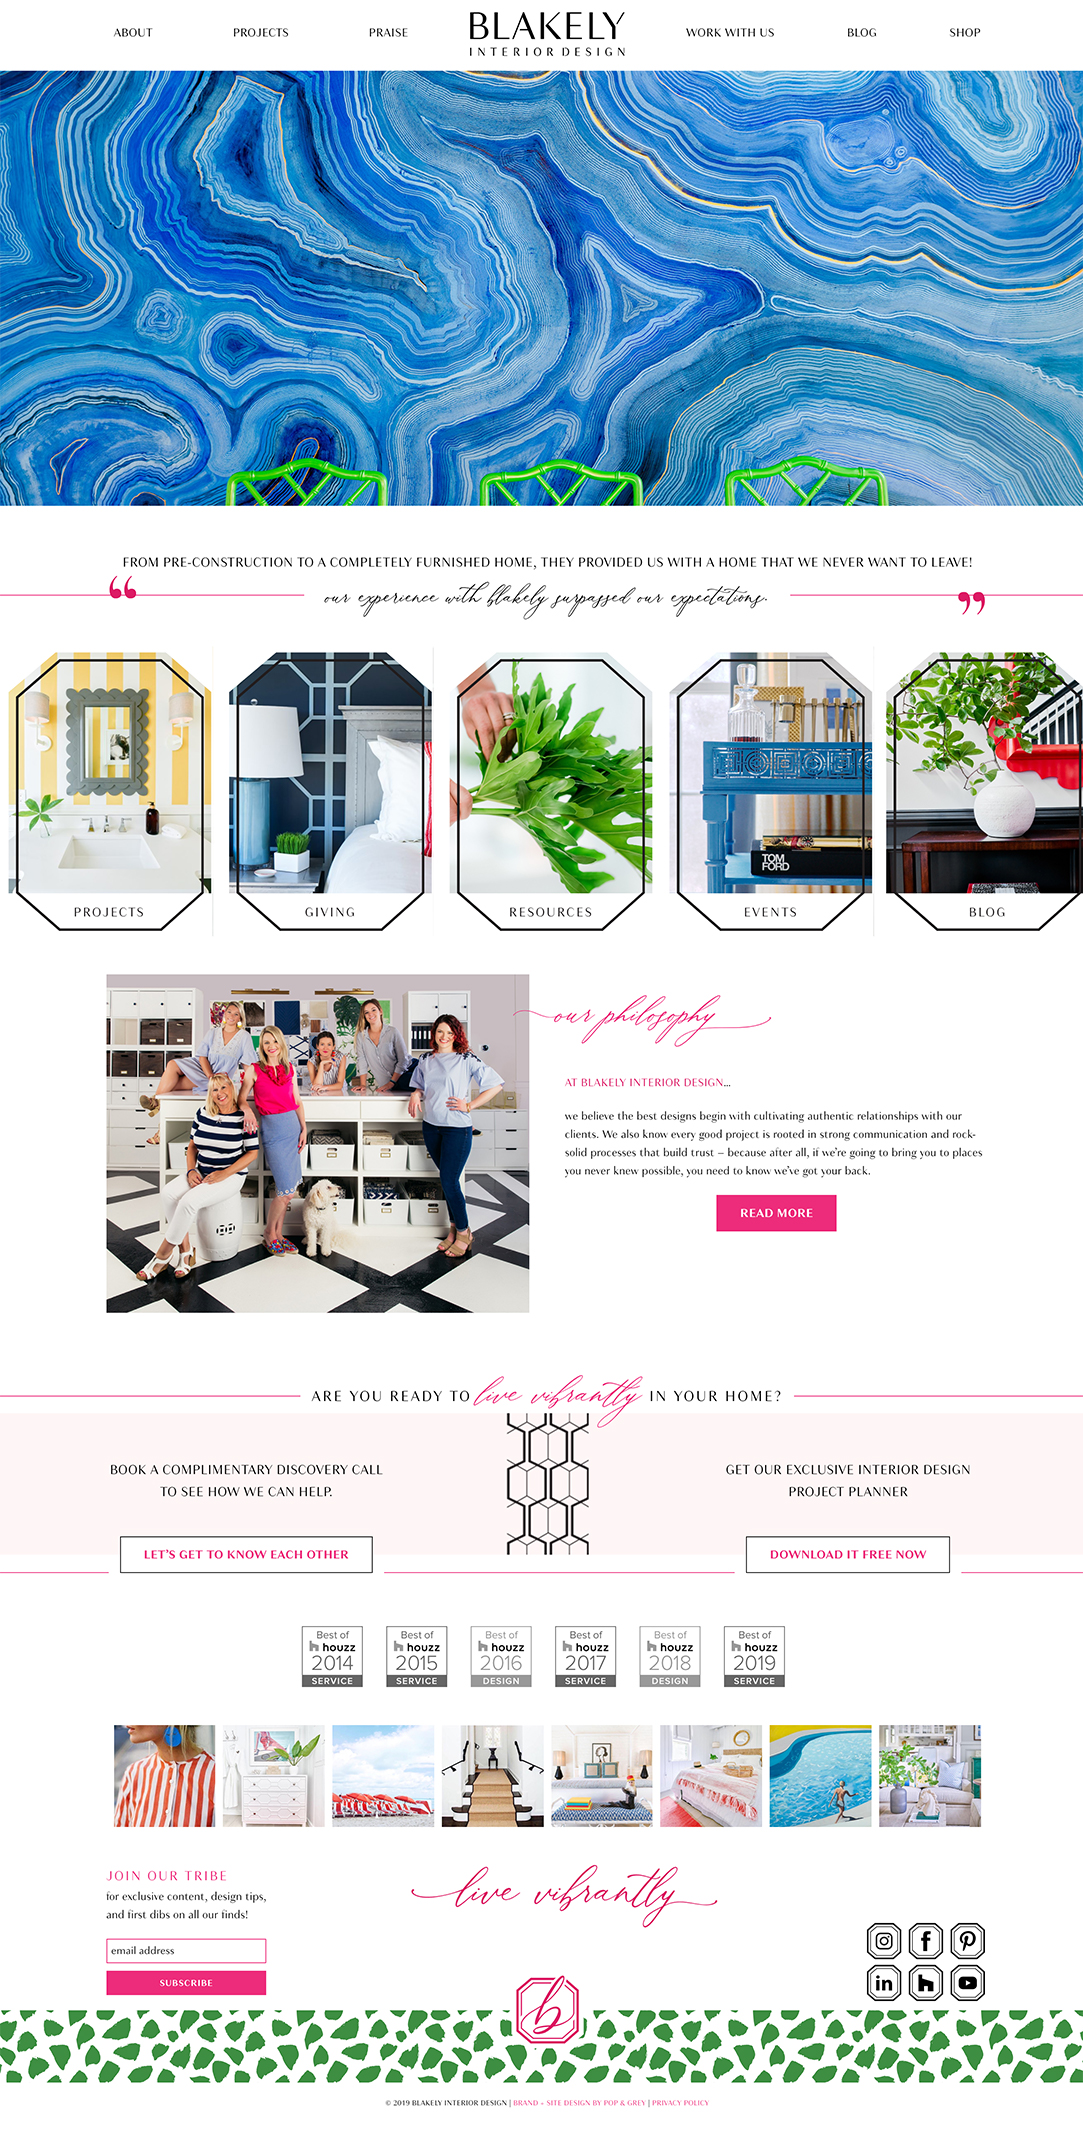 blakely interior design website design by pop and grey